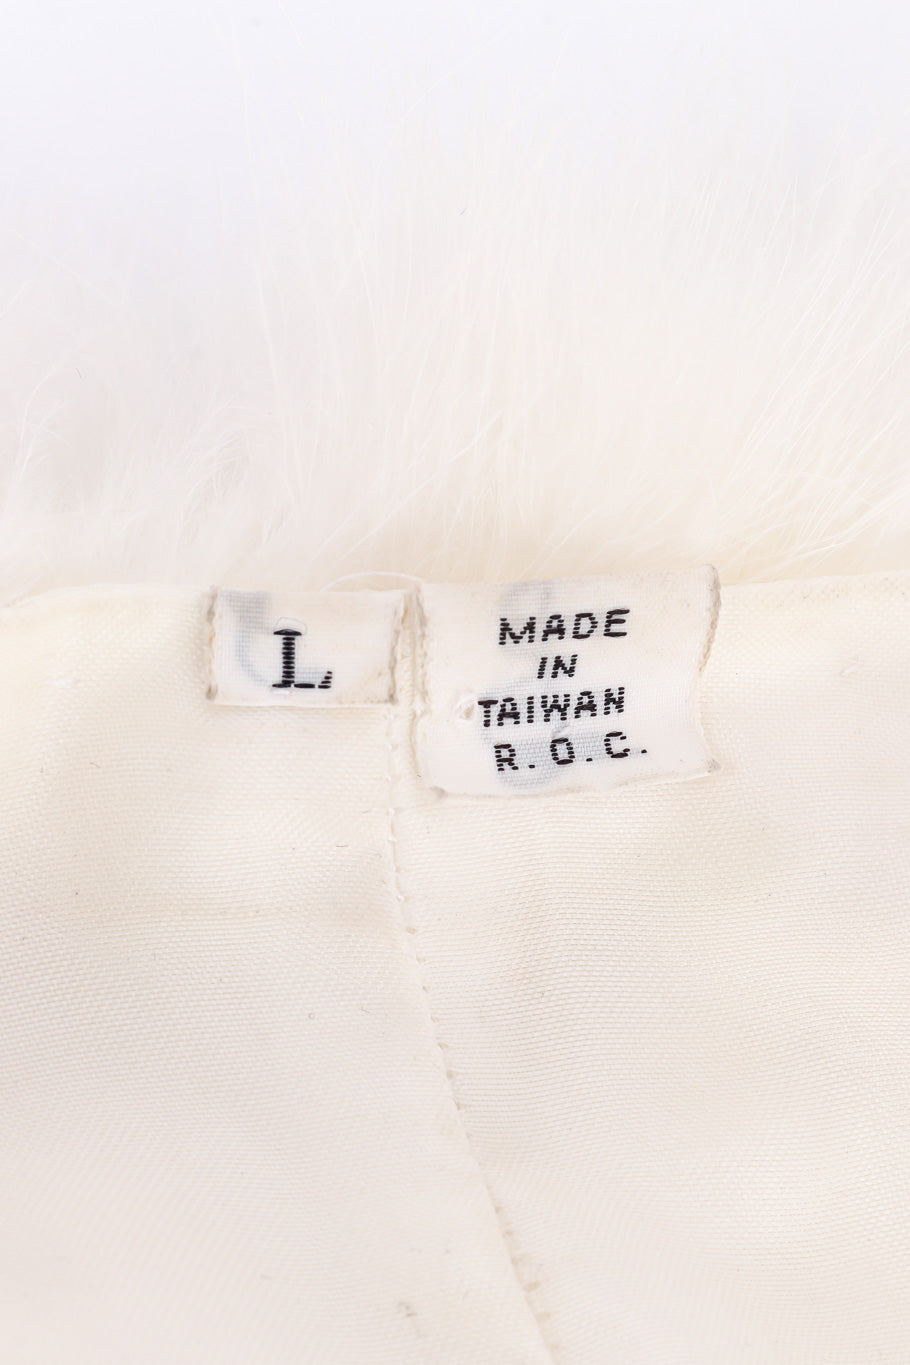 Vintage marabou coat flat lay label @recessla